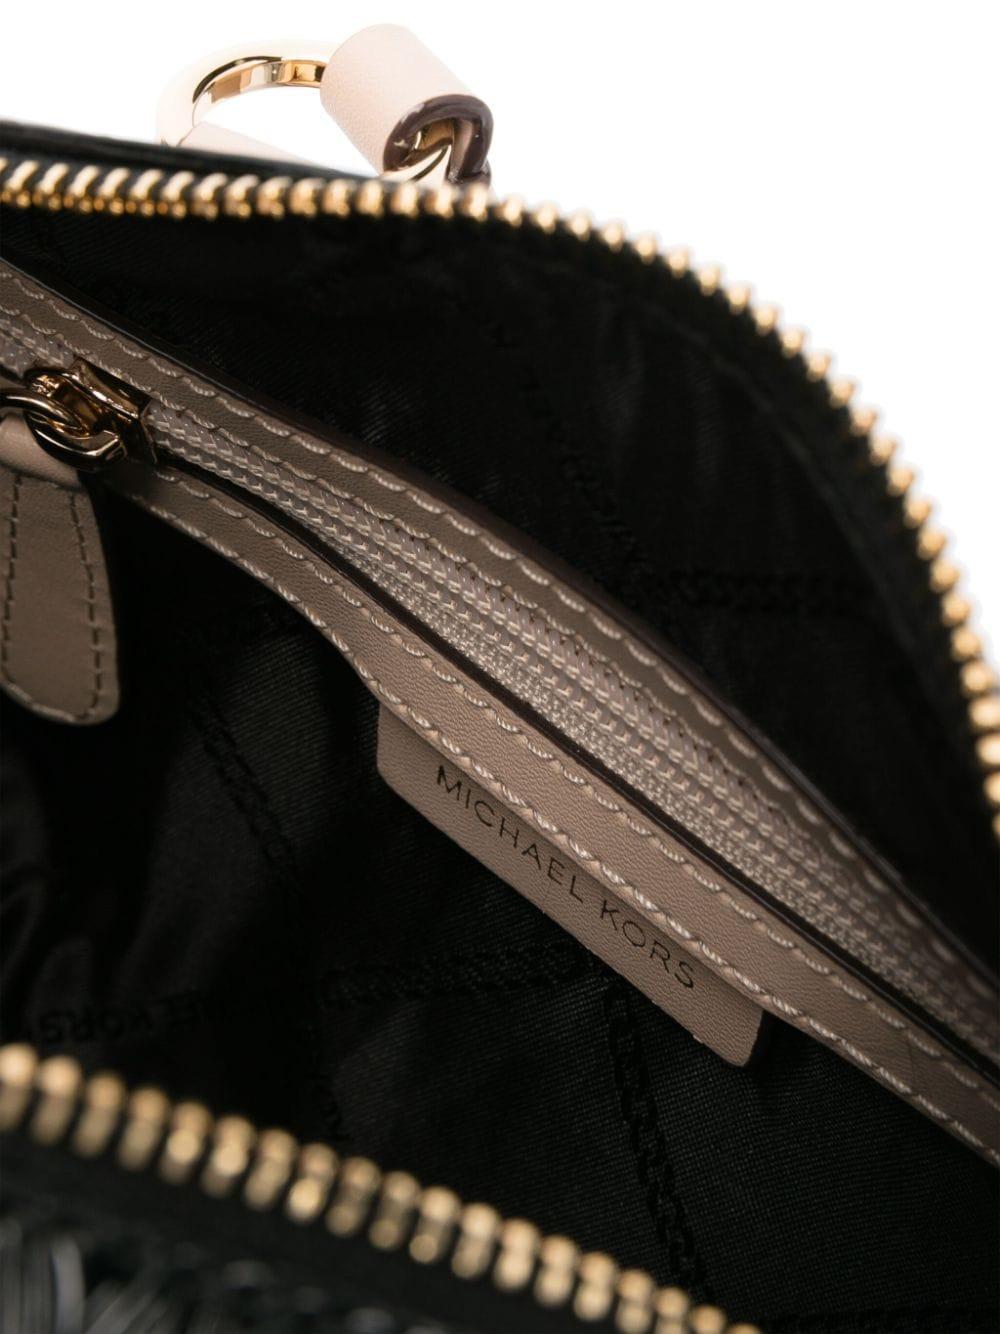 Michael Kors Saffiano Leather Padlock Tote Bag - Farfetch